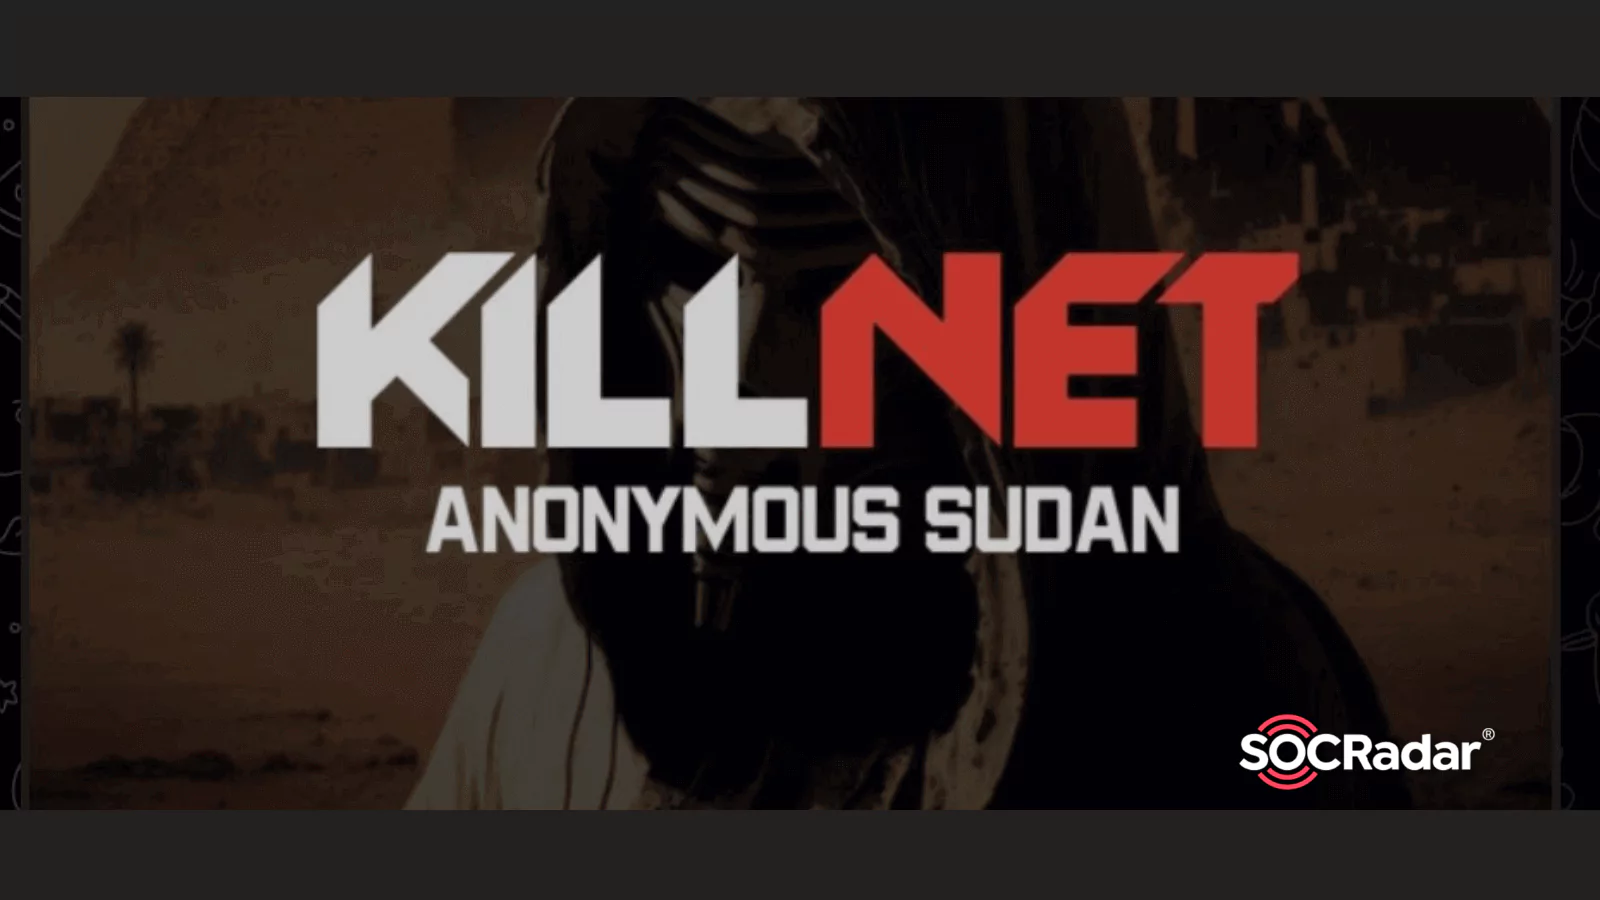 SOCRadar® Cyber Intelligence Inc. | Hacktivism on the Rise: KillNet Anonymous Sudan’s Cyber Campaign Targets Australia